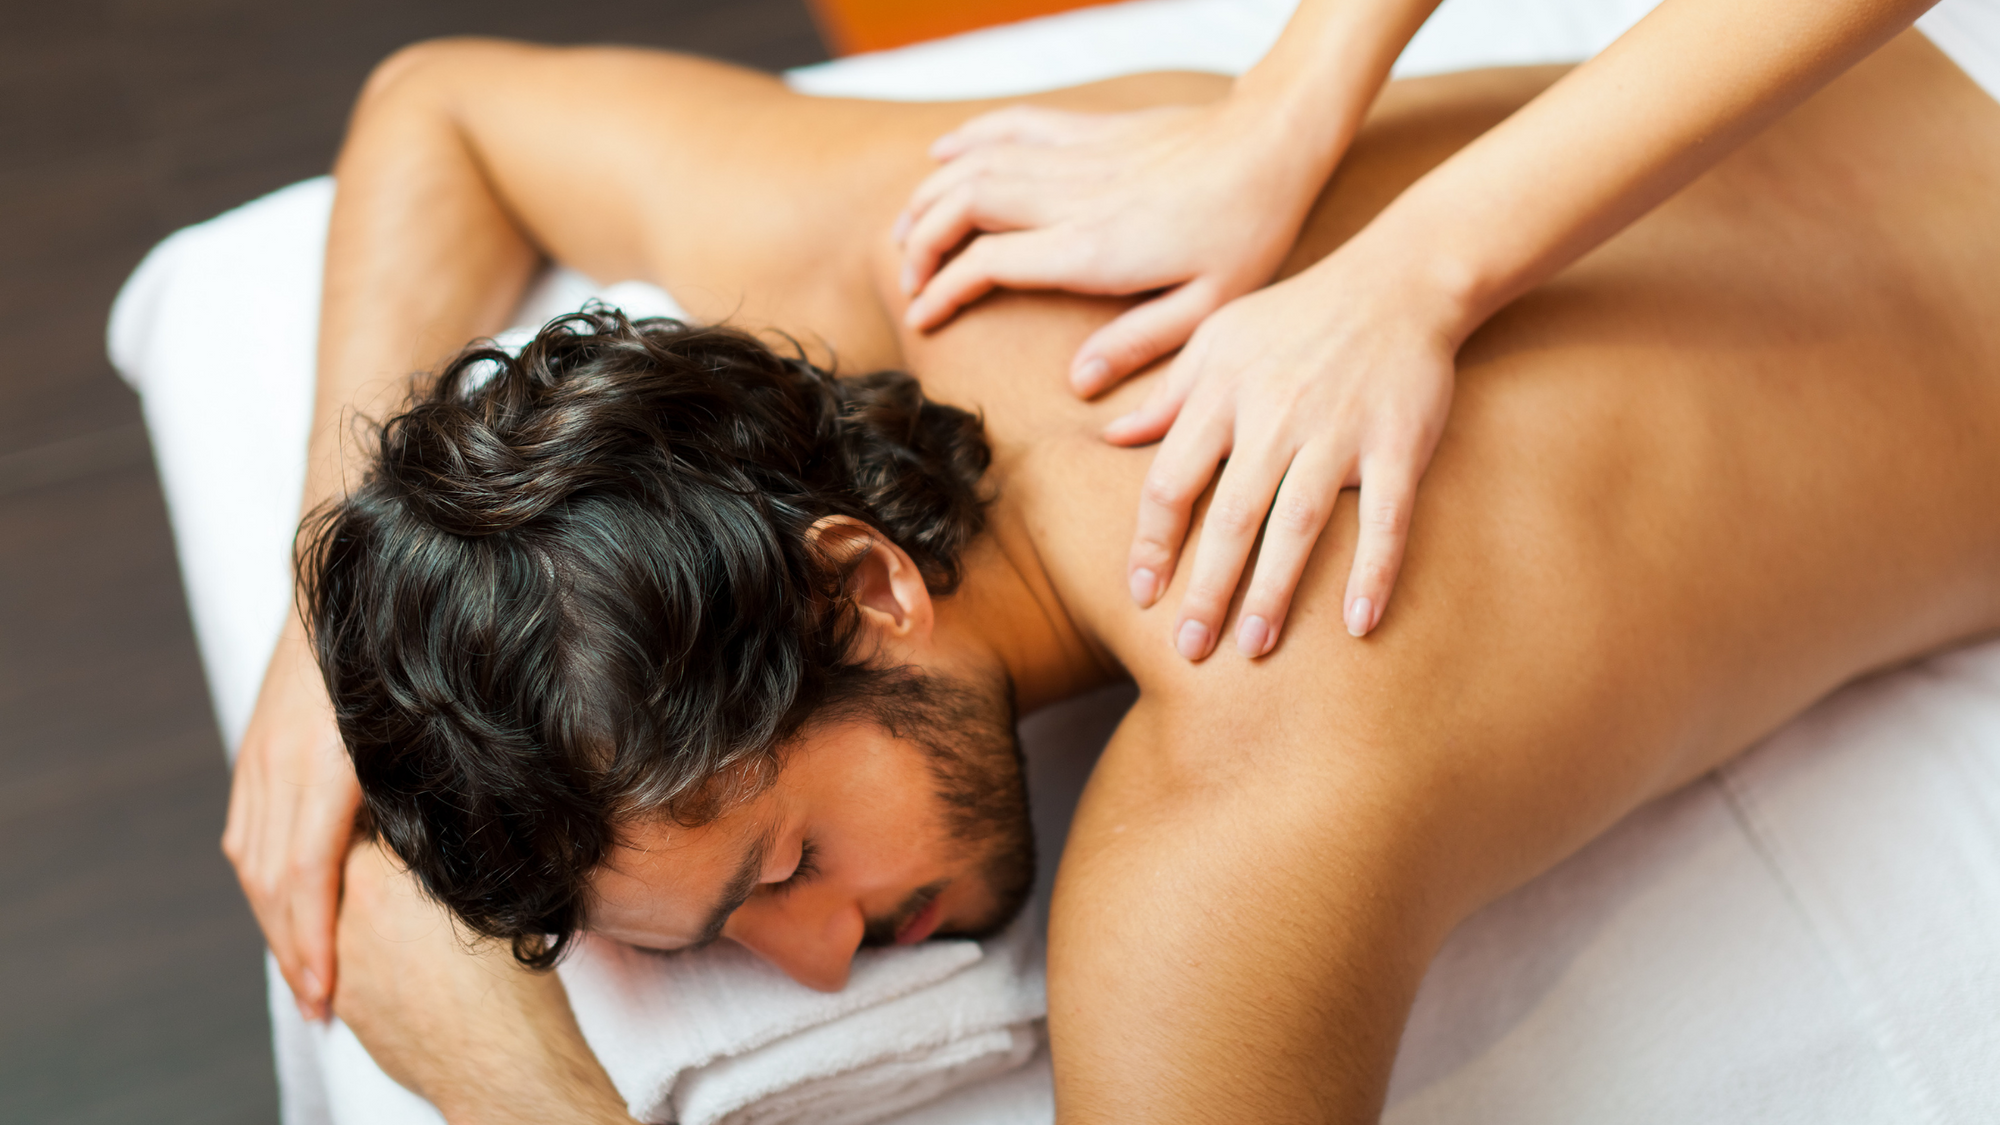 5 Common Massage Myths - Debunked